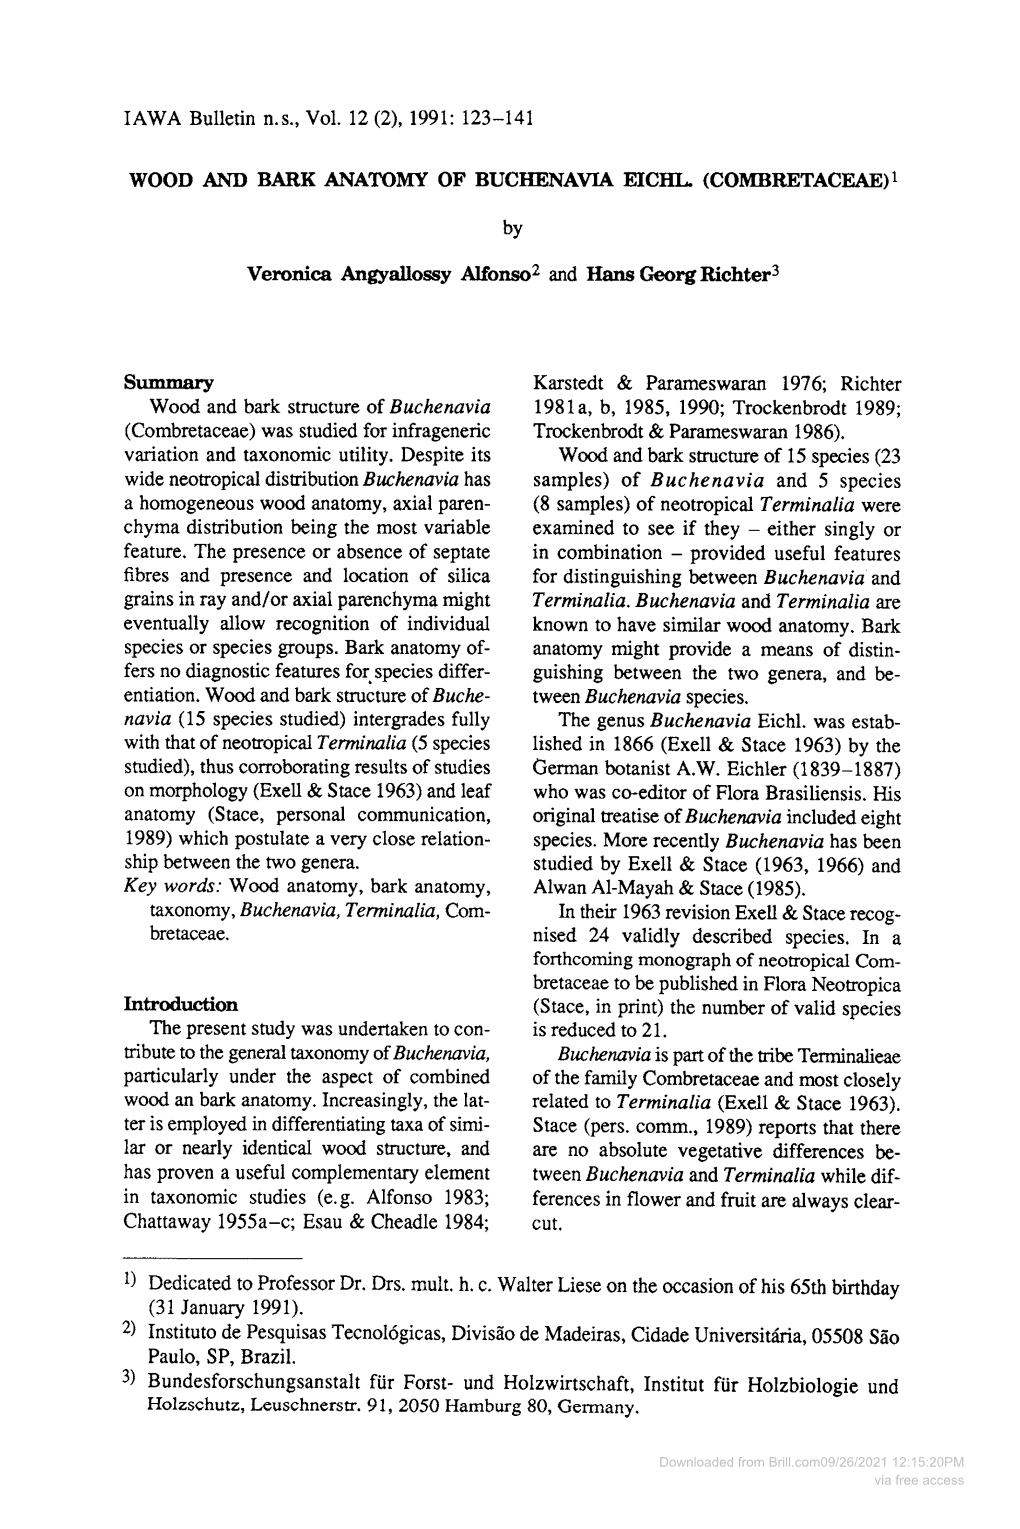 Taxonomy, Buchenavia, Terminalia, Com• in Their 1963 Revision Exell & Stace Recog• Bretaceae